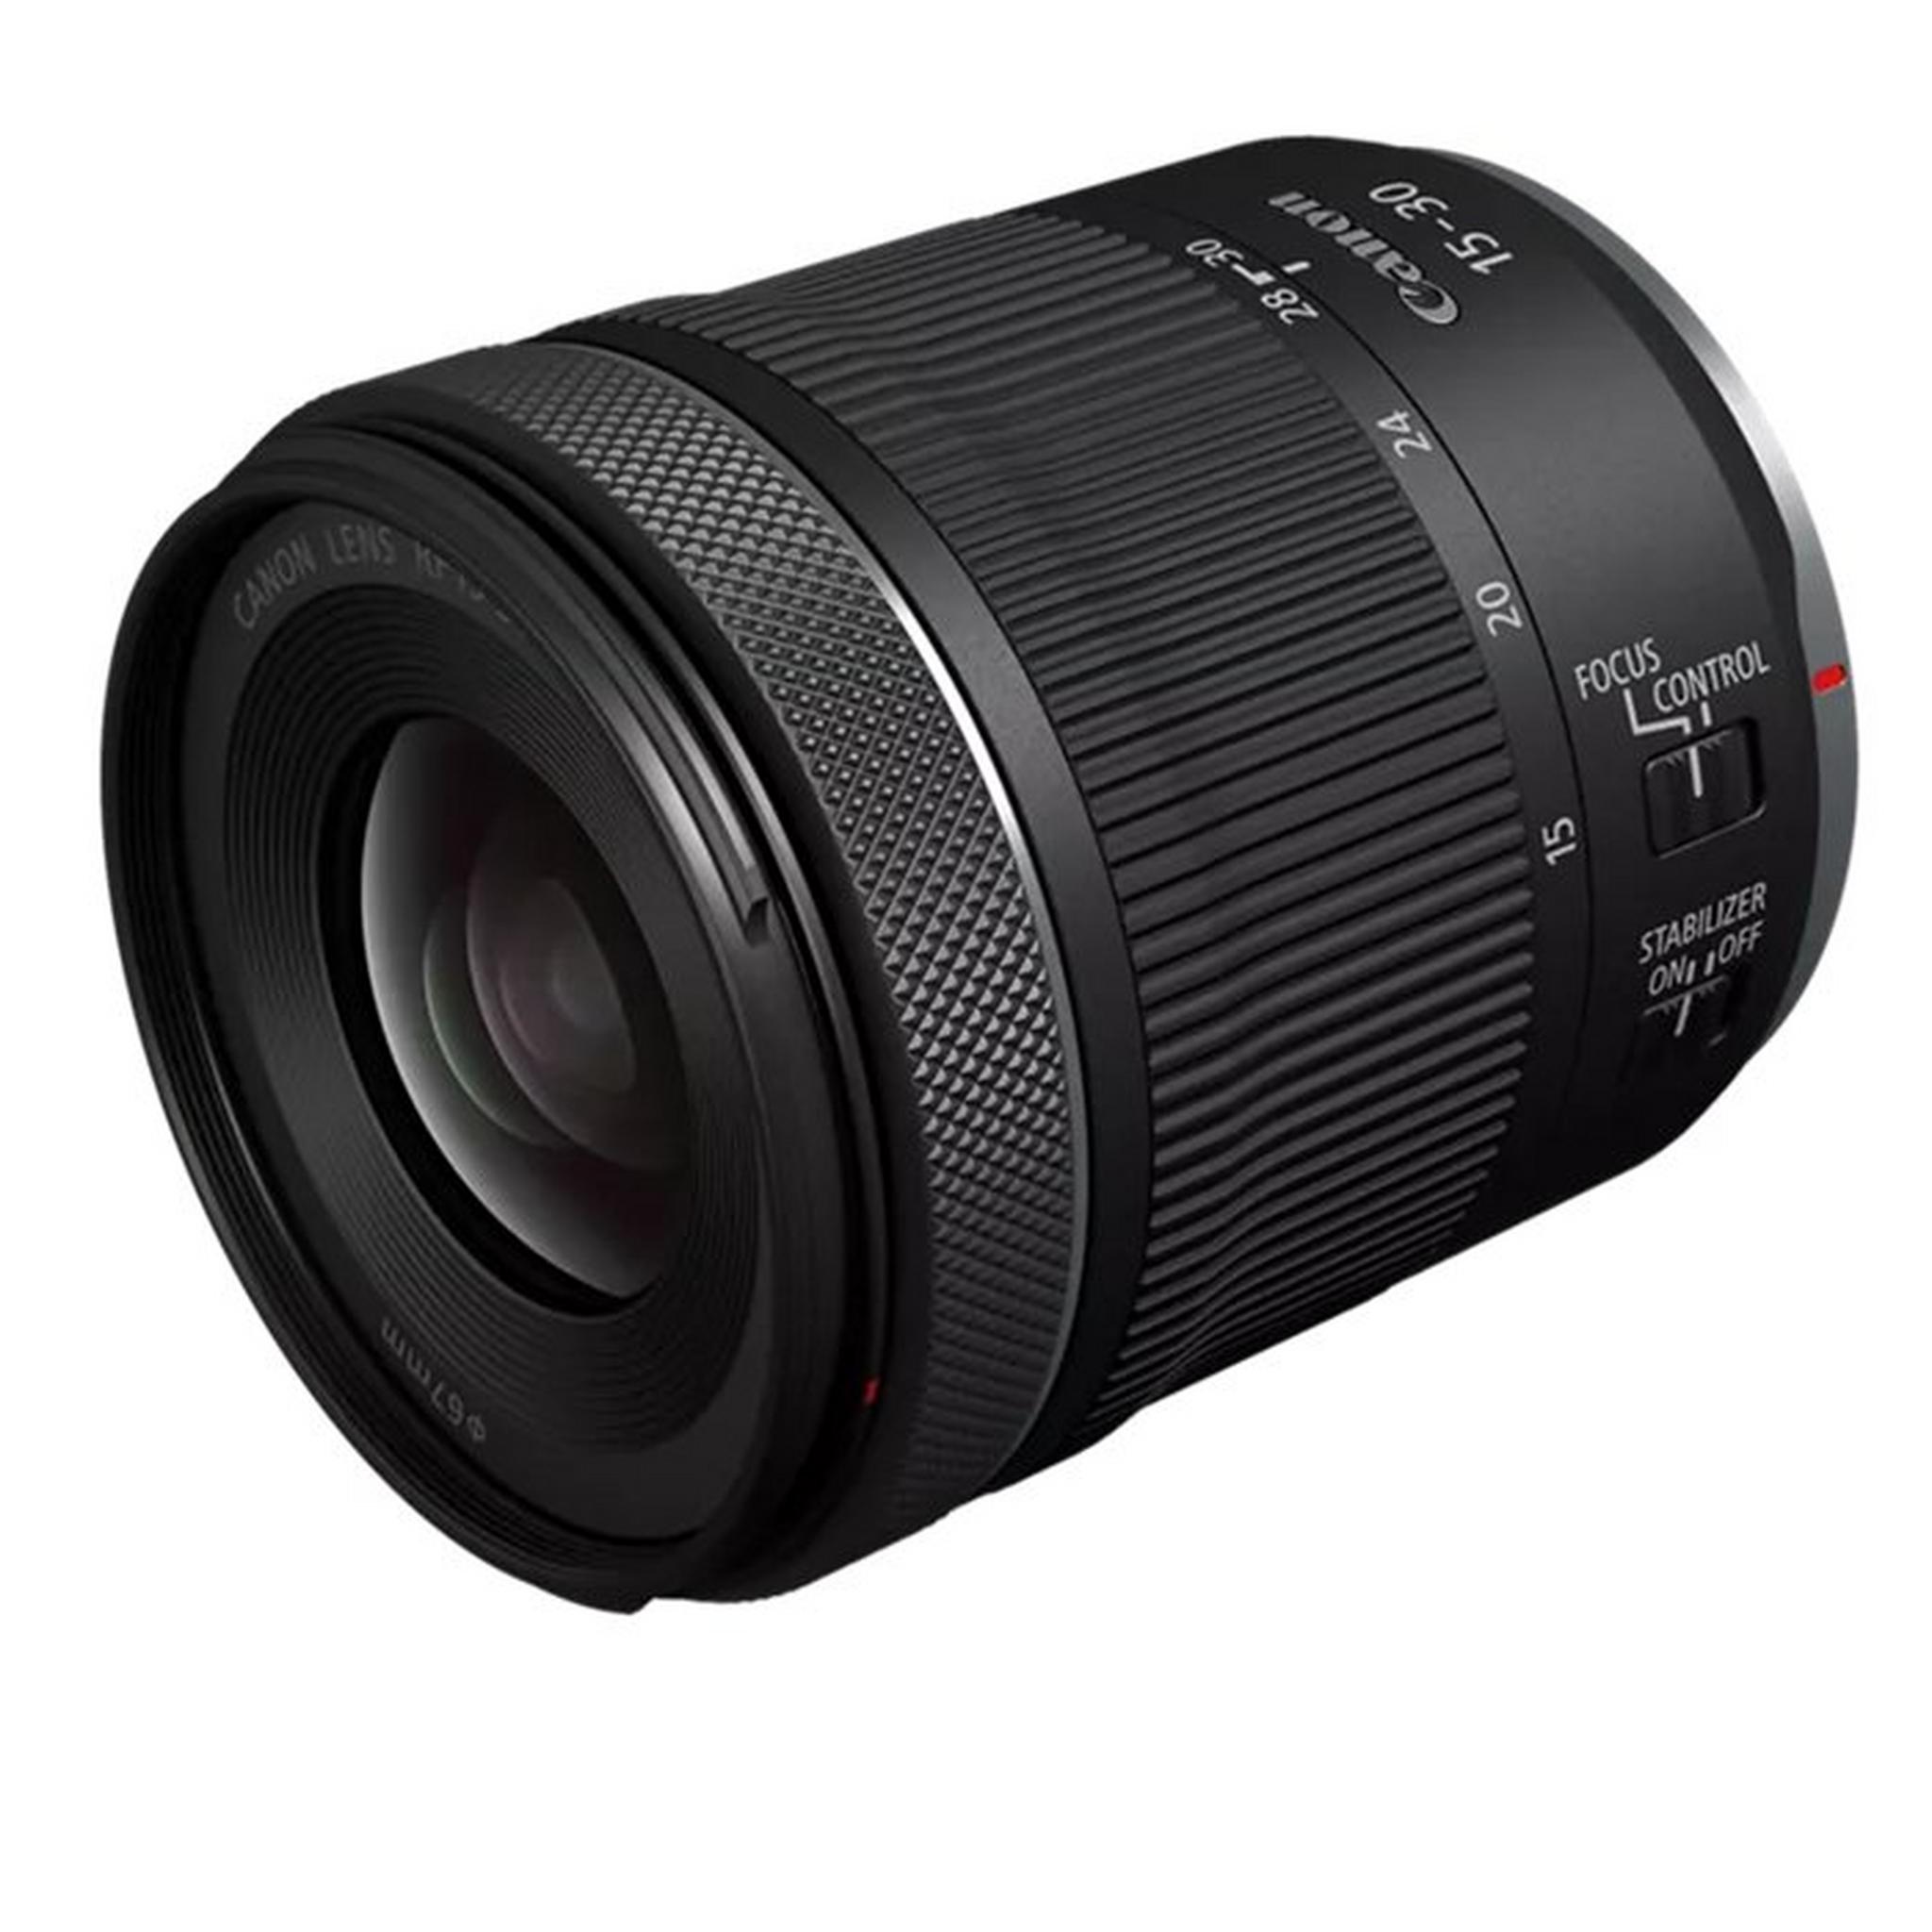 Canon RF 15-30mm Lens, F4.5-6.3 IS STM, 5775C005AA – Black